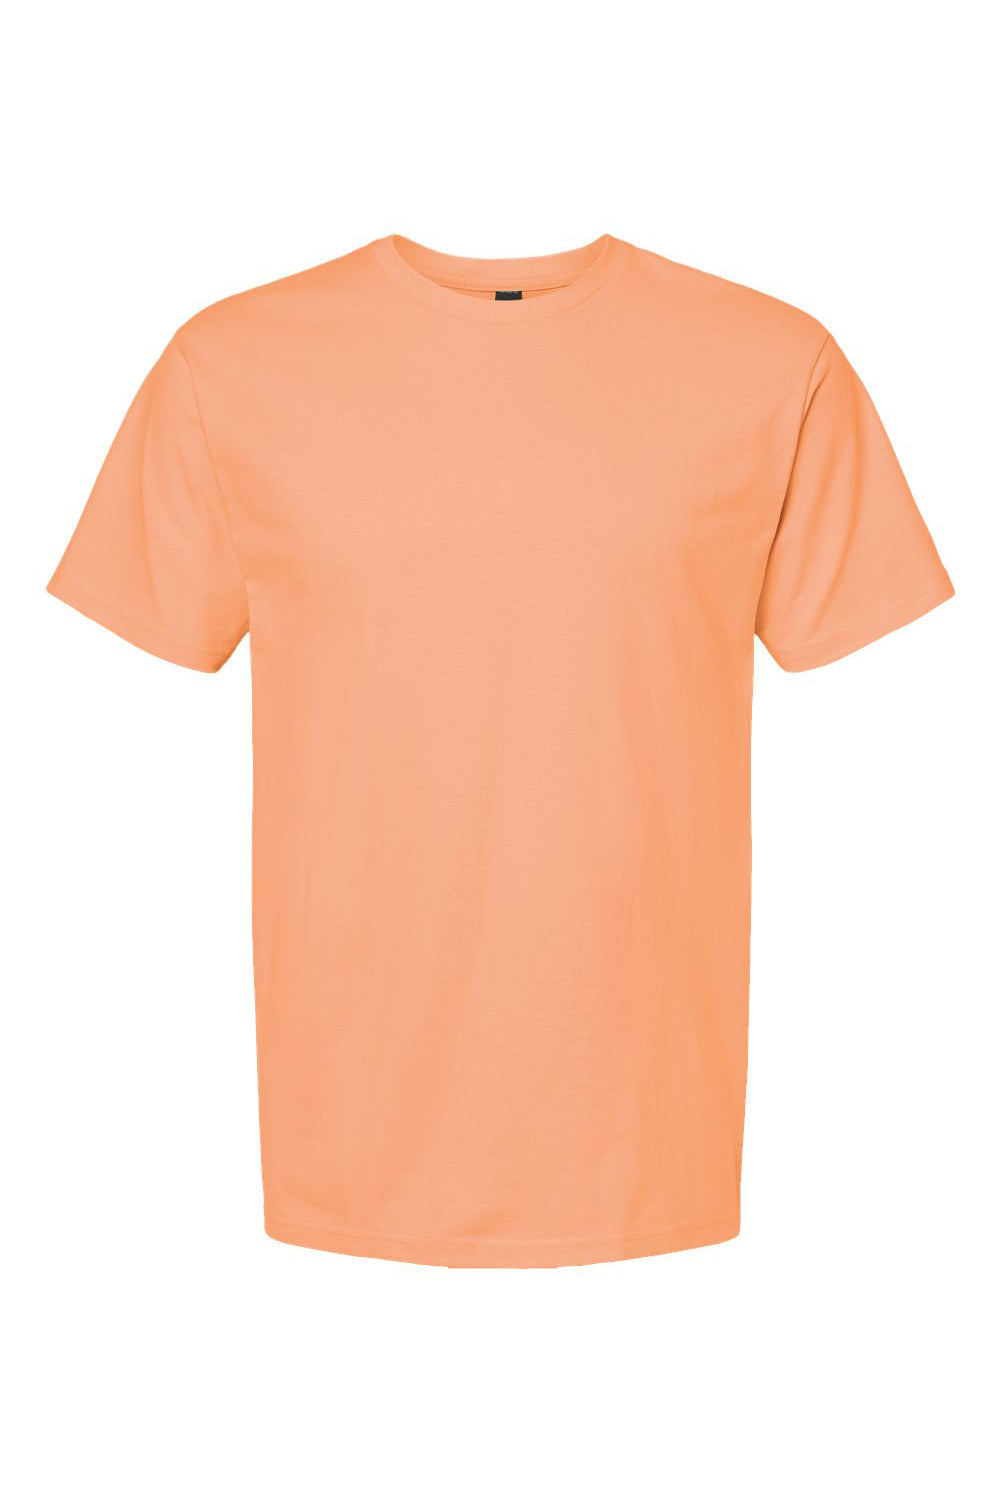 Tultex 290 Mens Jersey Short Sleeve Crewneck T-Shirt Cantaloupe Orange Flat Front